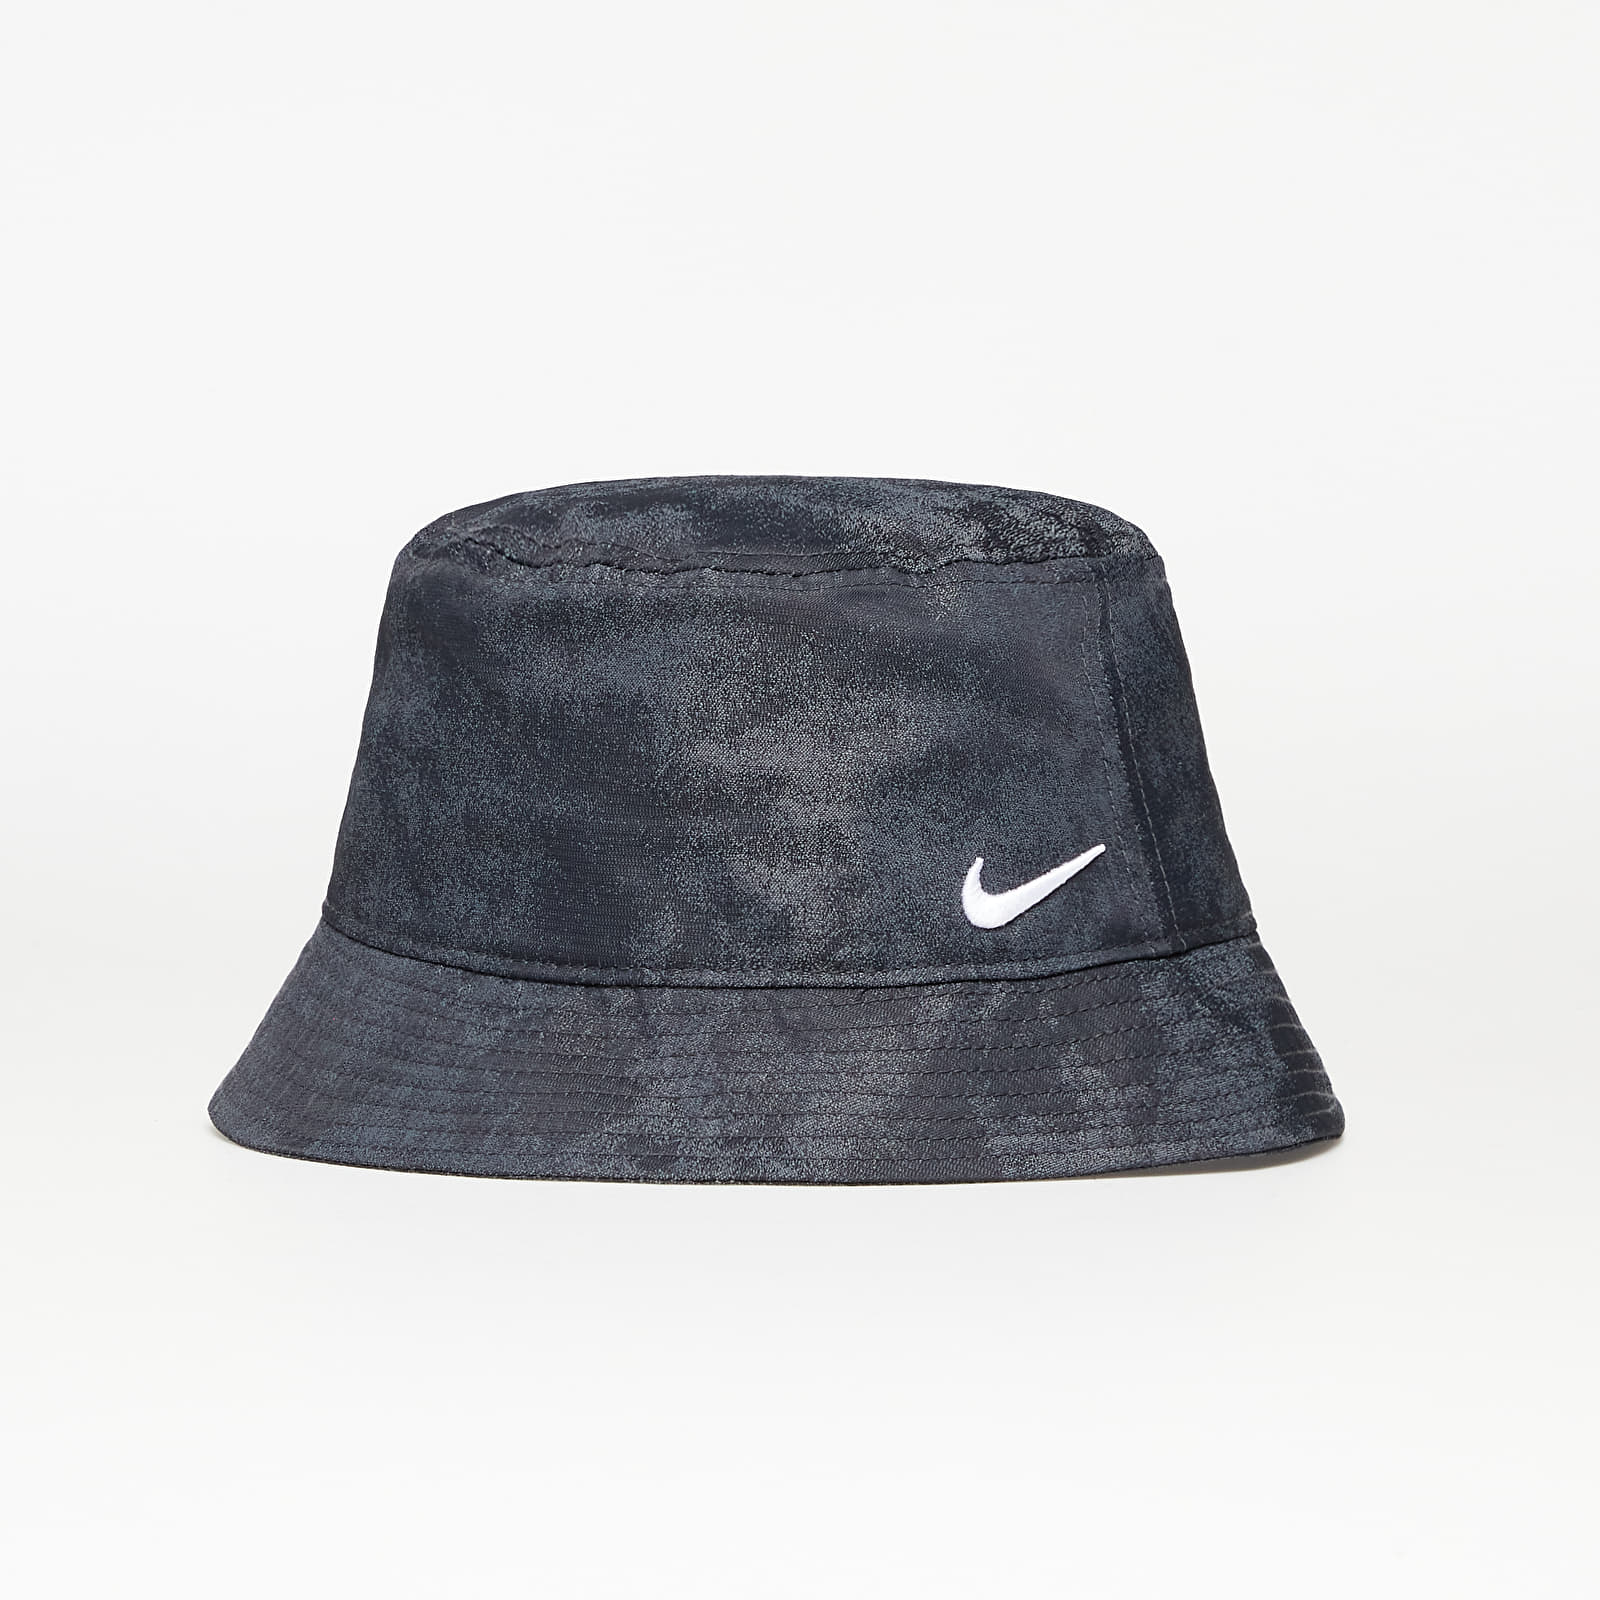 Бъкет шапки NikeLab U NRG Bucket Hat Black 947047